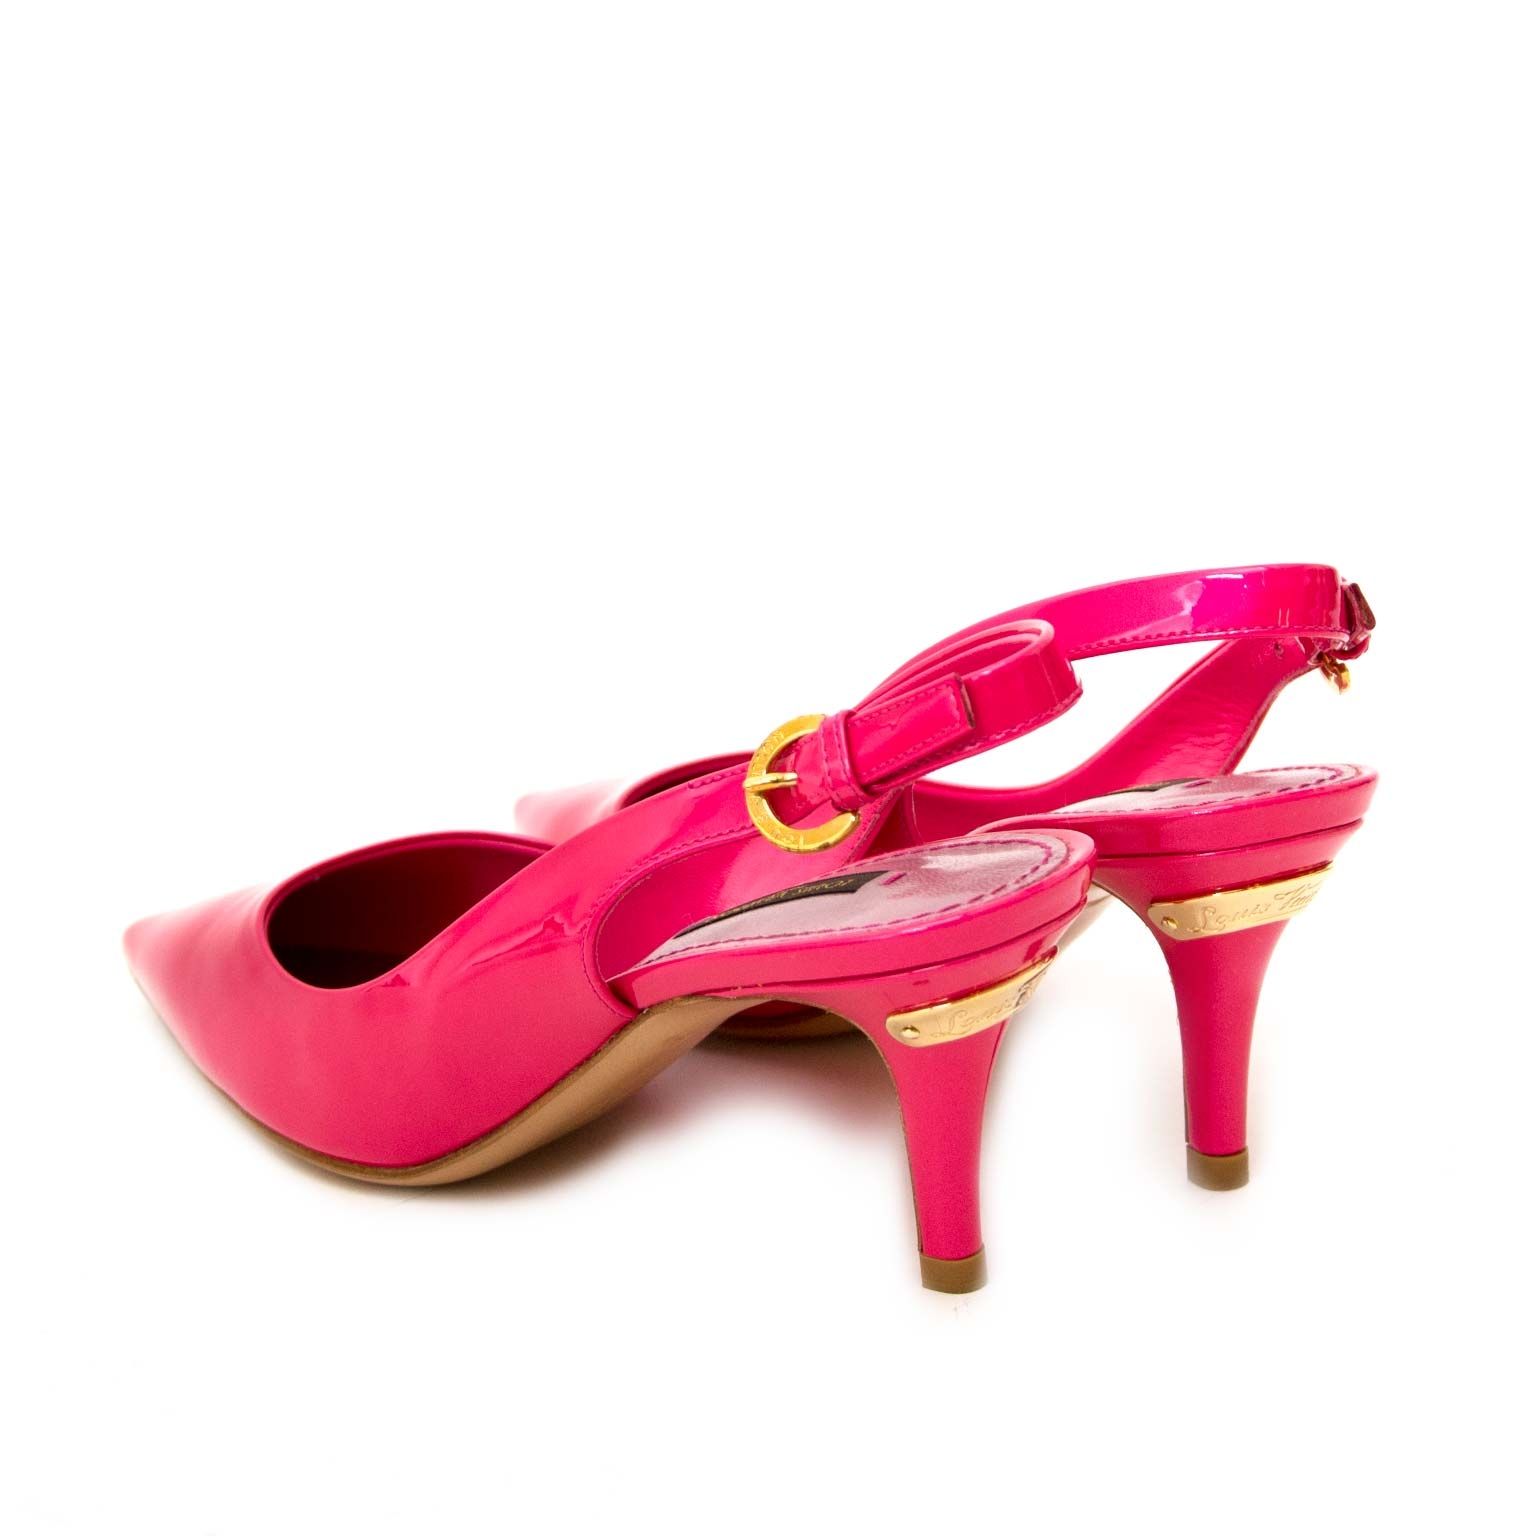 Louis Vuitton's Kitten Heels  Shoes heels classy, Shoes, Hype shoes